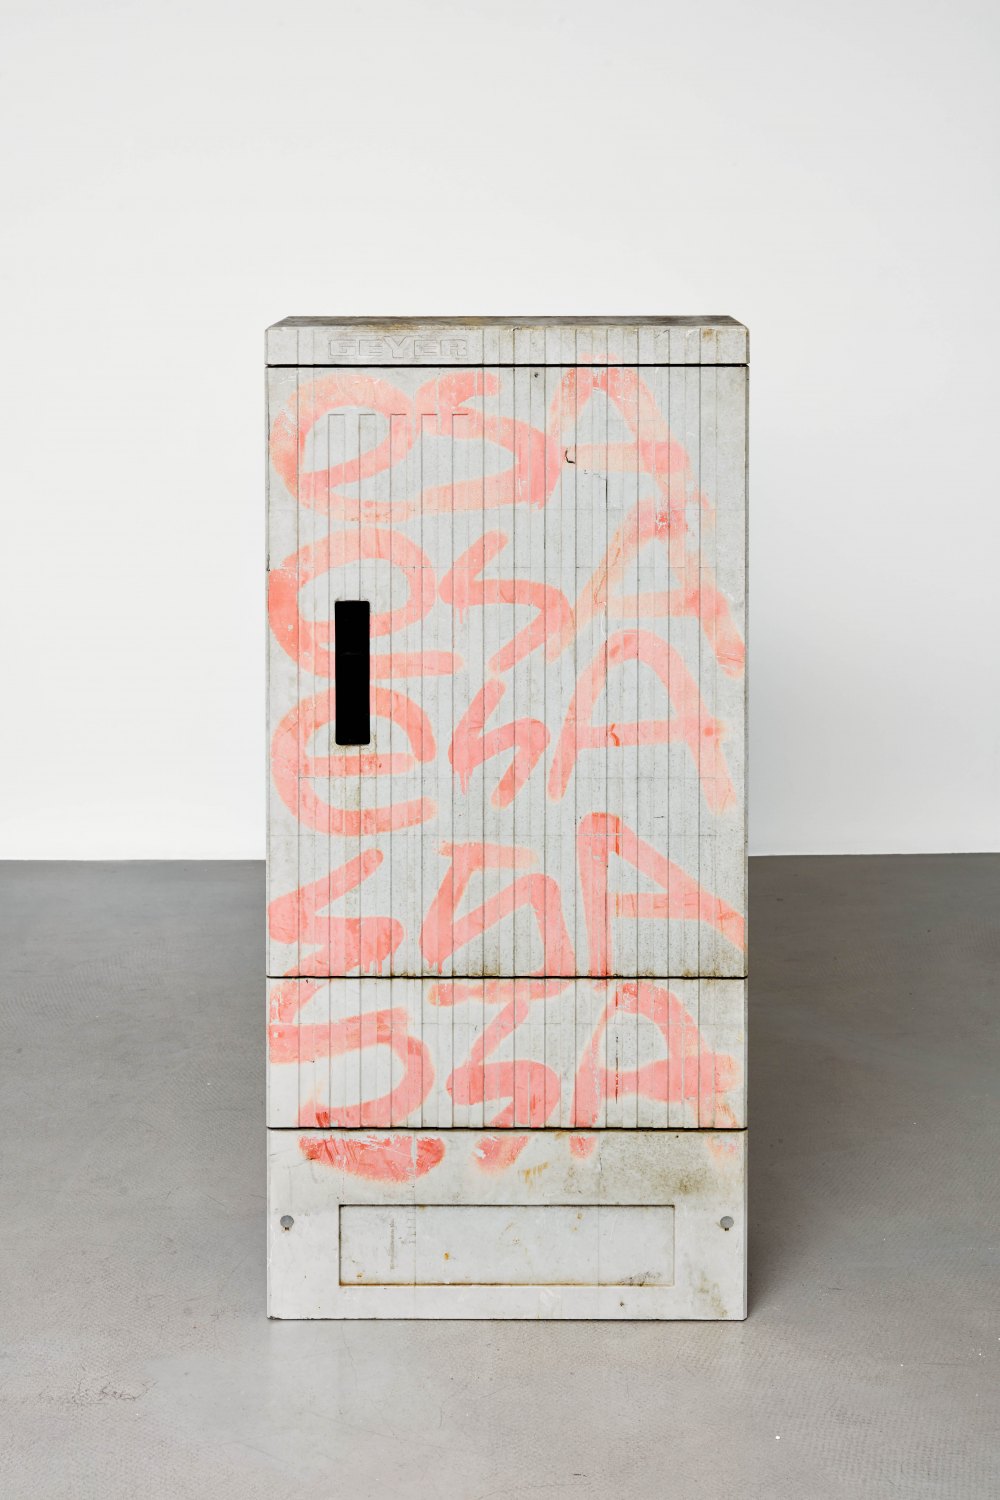 Klara Lidén  Esaesa, 2020 junction box 130.4 x 58.2 x 27.6 cm